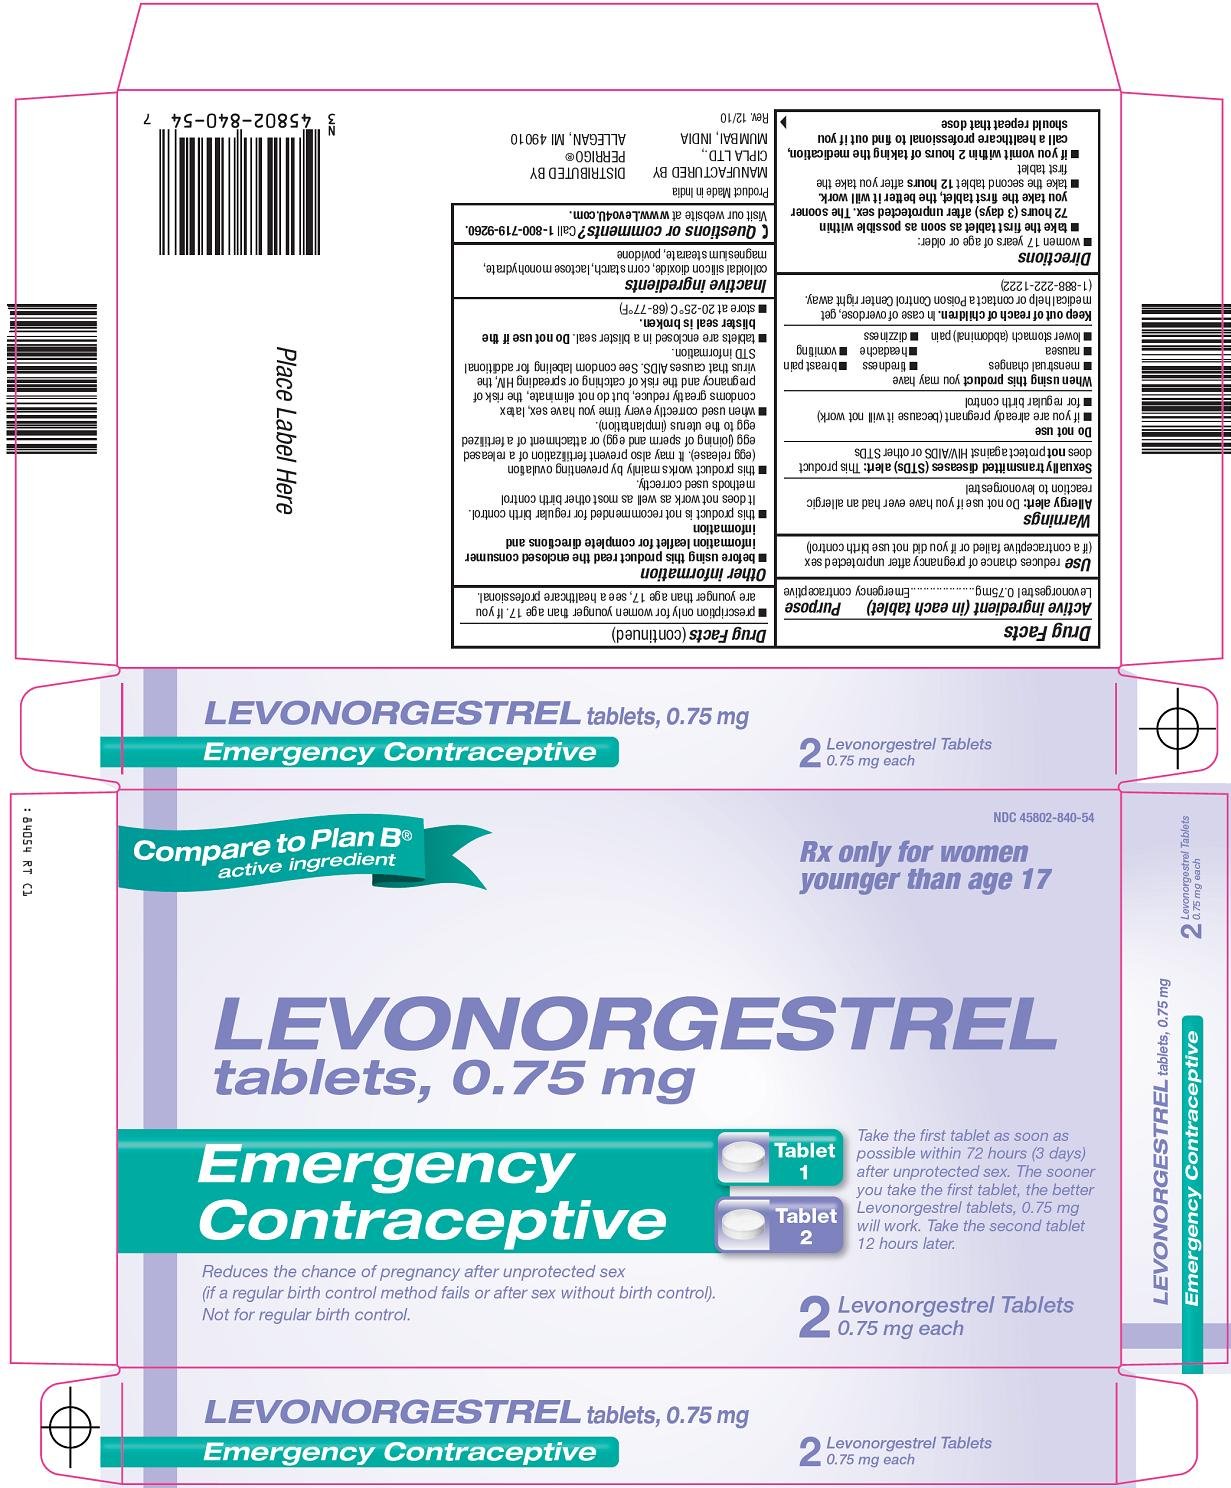 Levonorgestrel tablets, 0.75mg Emergency Contraceptive Carton